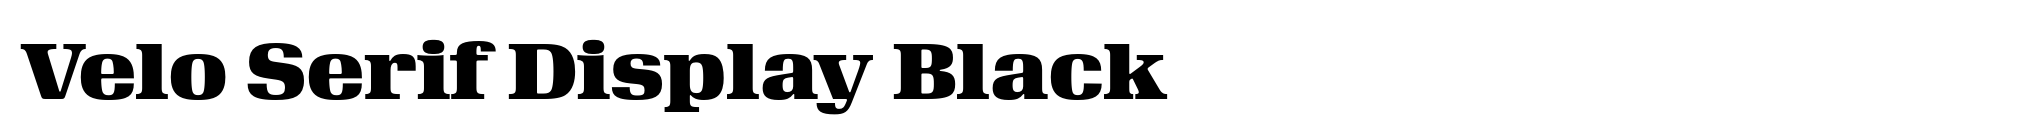 Velo Serif Display Black image